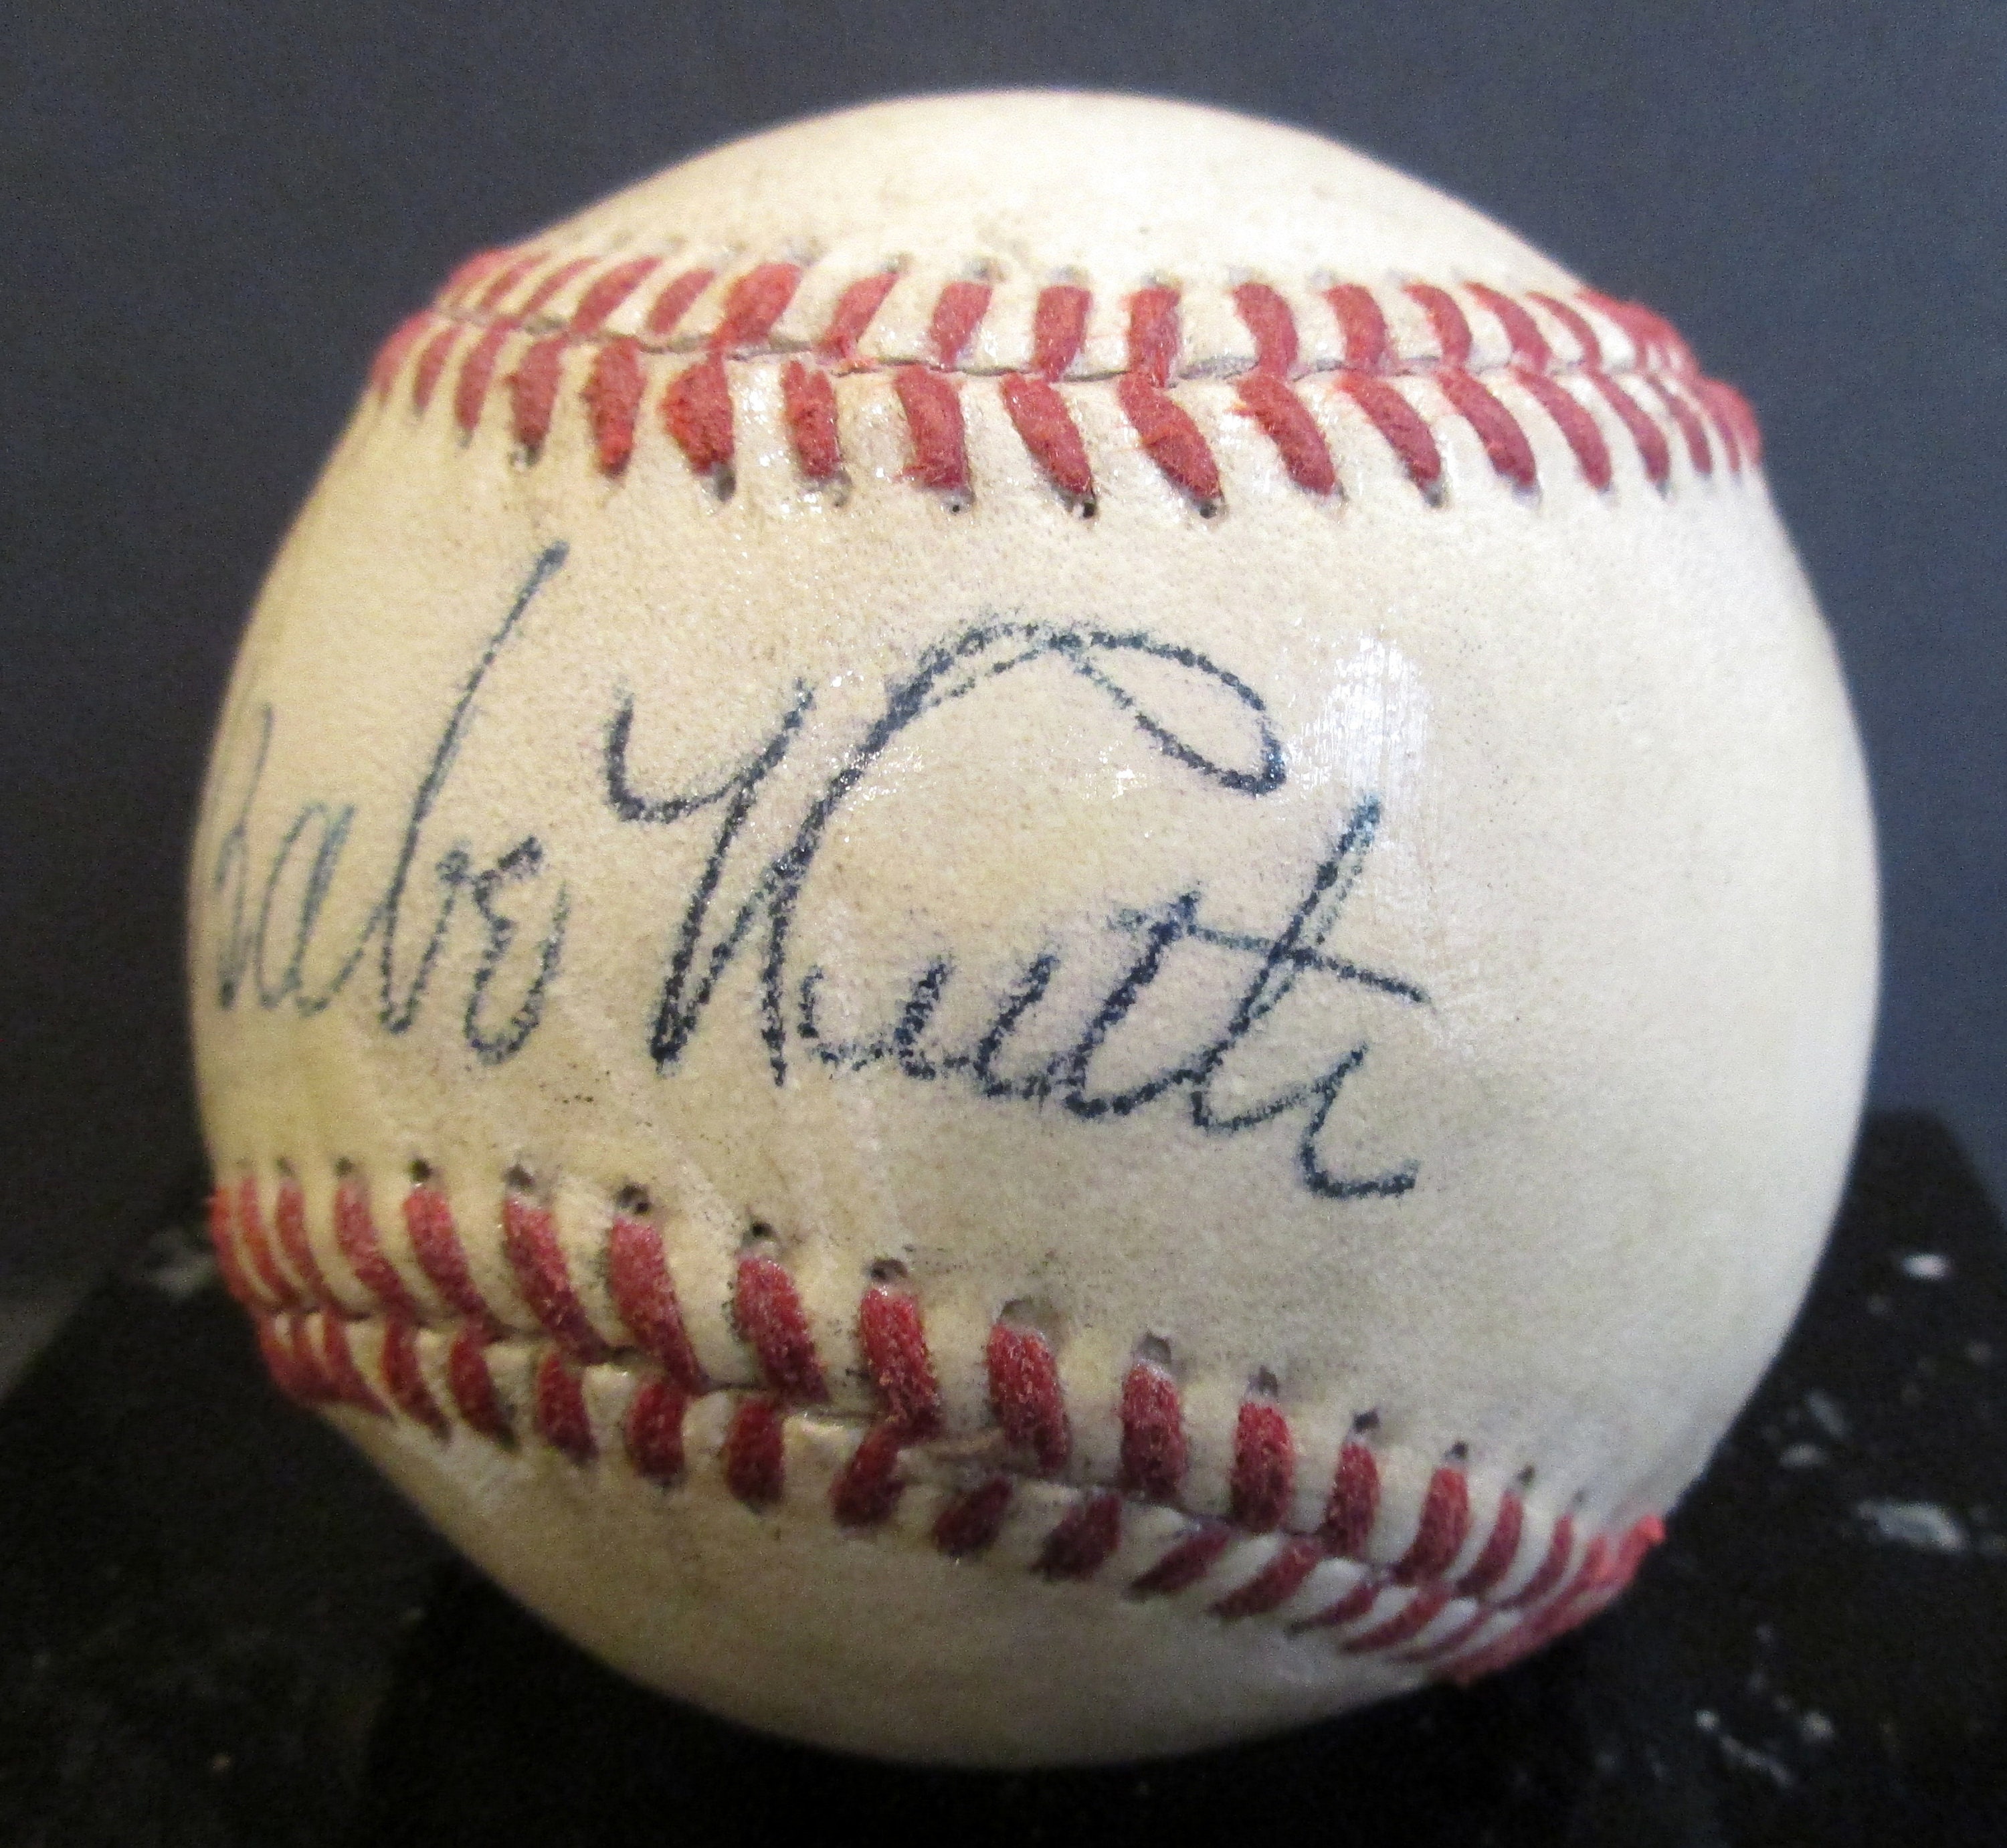 The Sandlot Babe Ruth Autographed 1930's Baseball. Replica Souvenir Ball